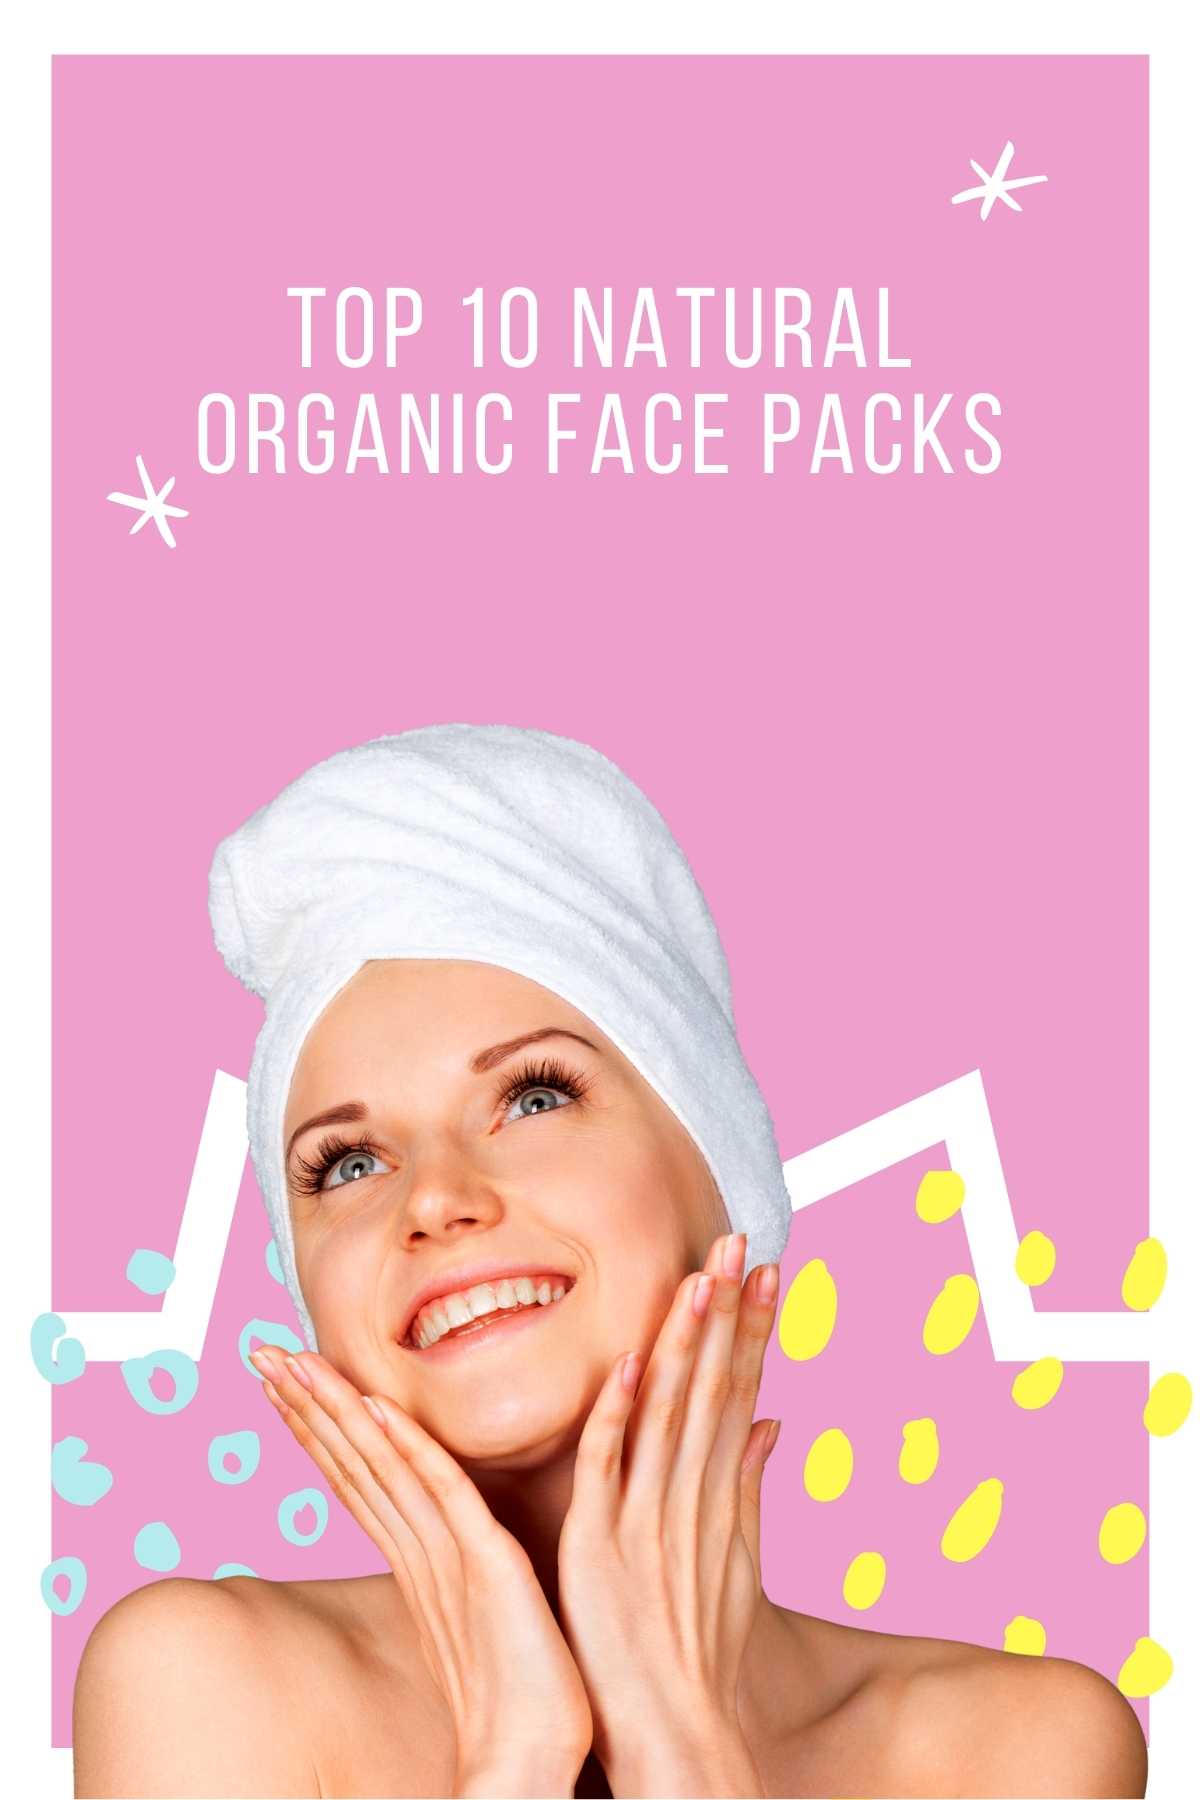 Top 10 natural organic face packs